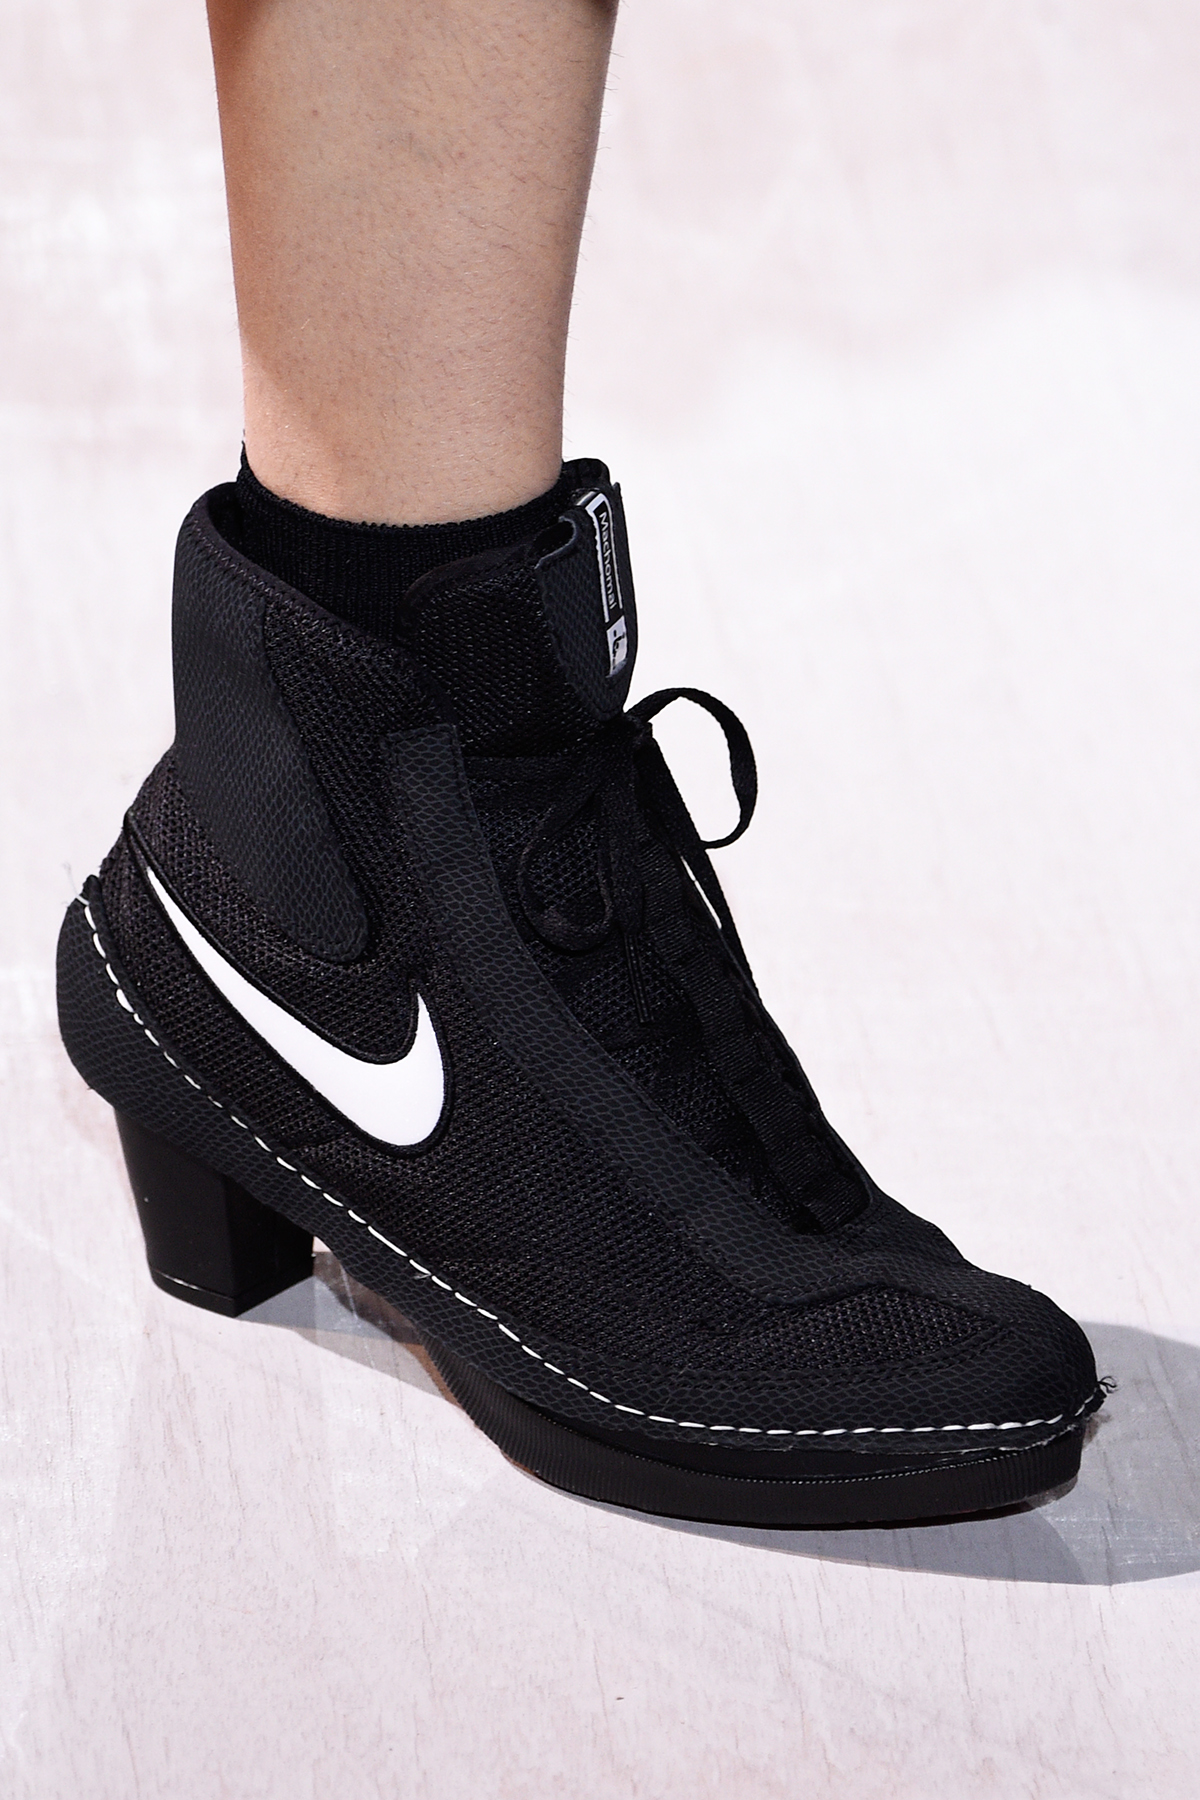 entregar Seminario enero See Nike x Comme des Garçons' High-Heel Sneakers | Who What Wear